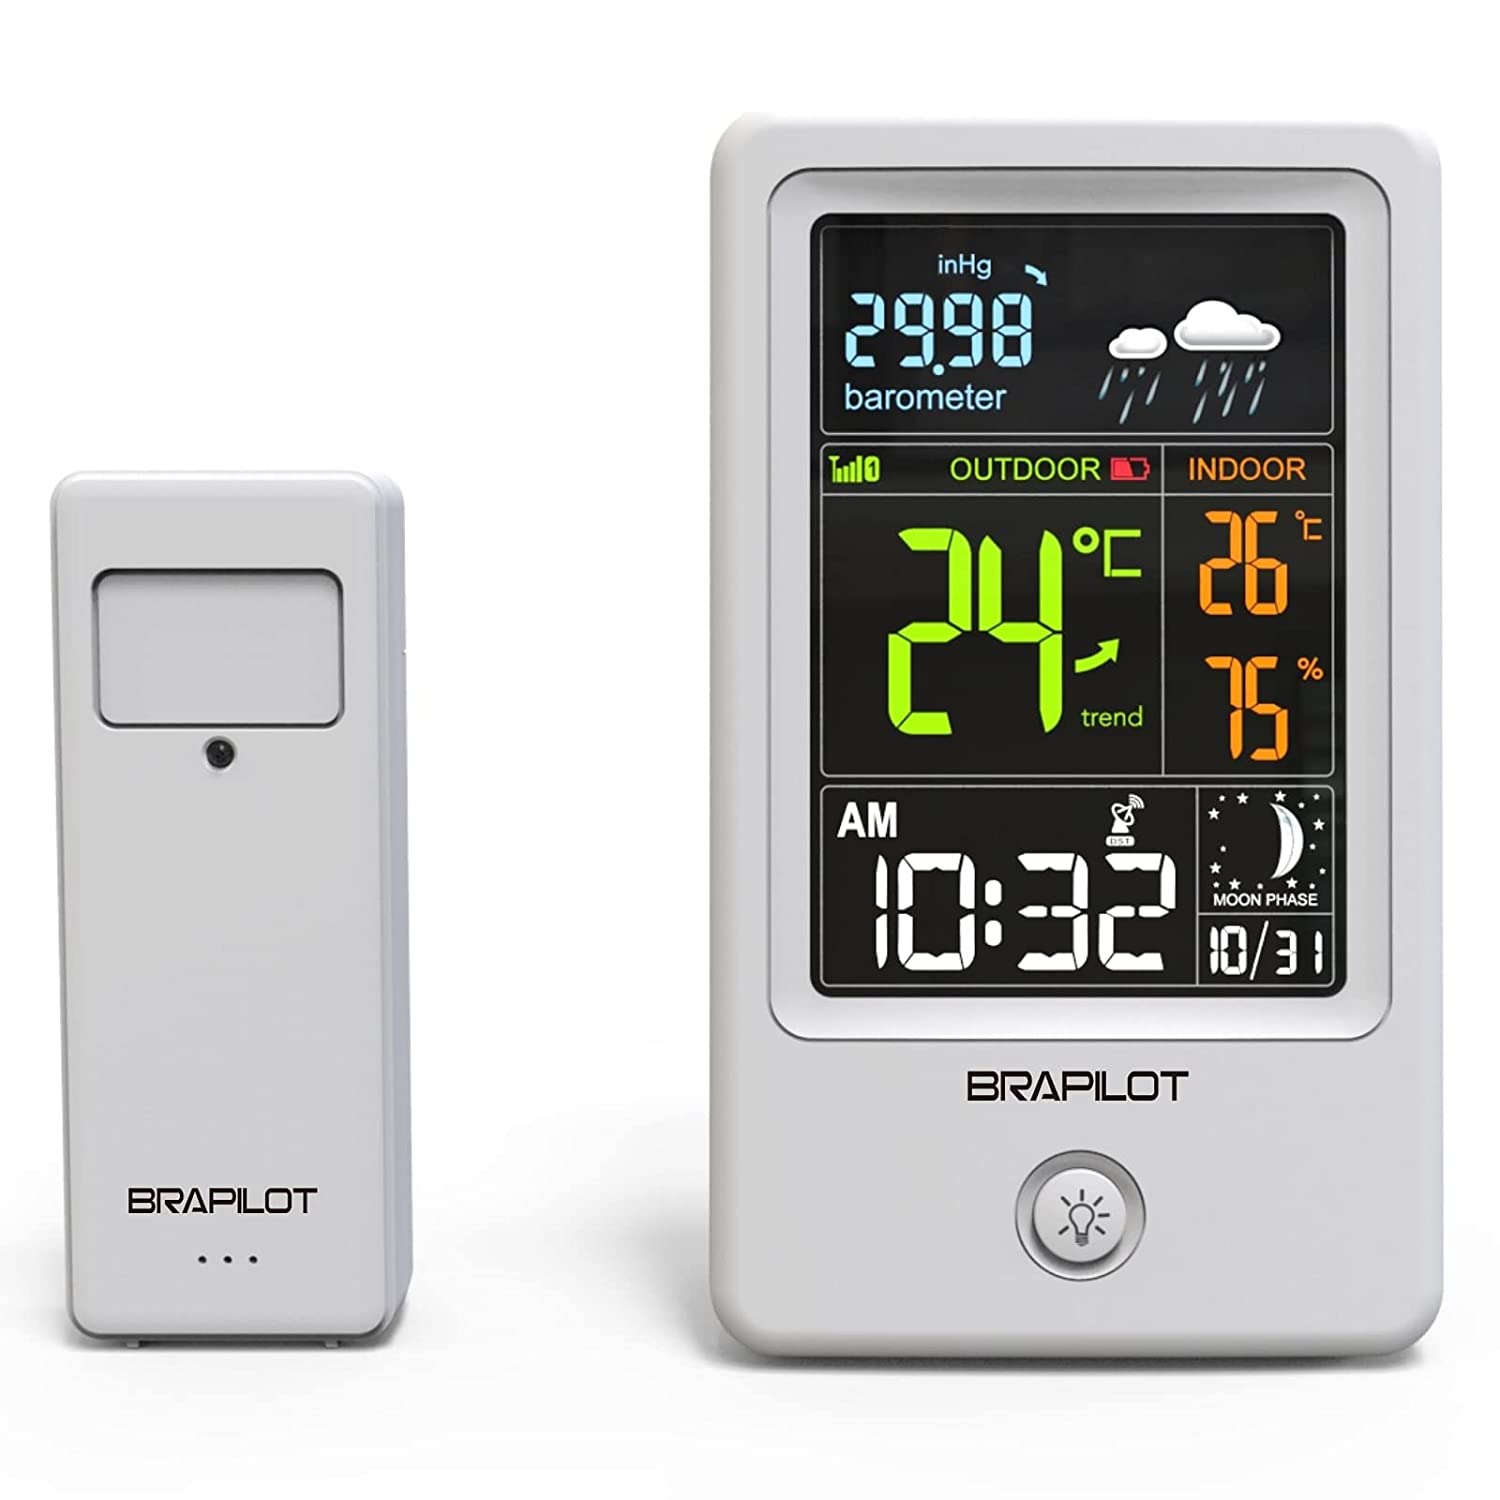 KETOTEK E0161 Weather Station Forecast Wireless Thermometer